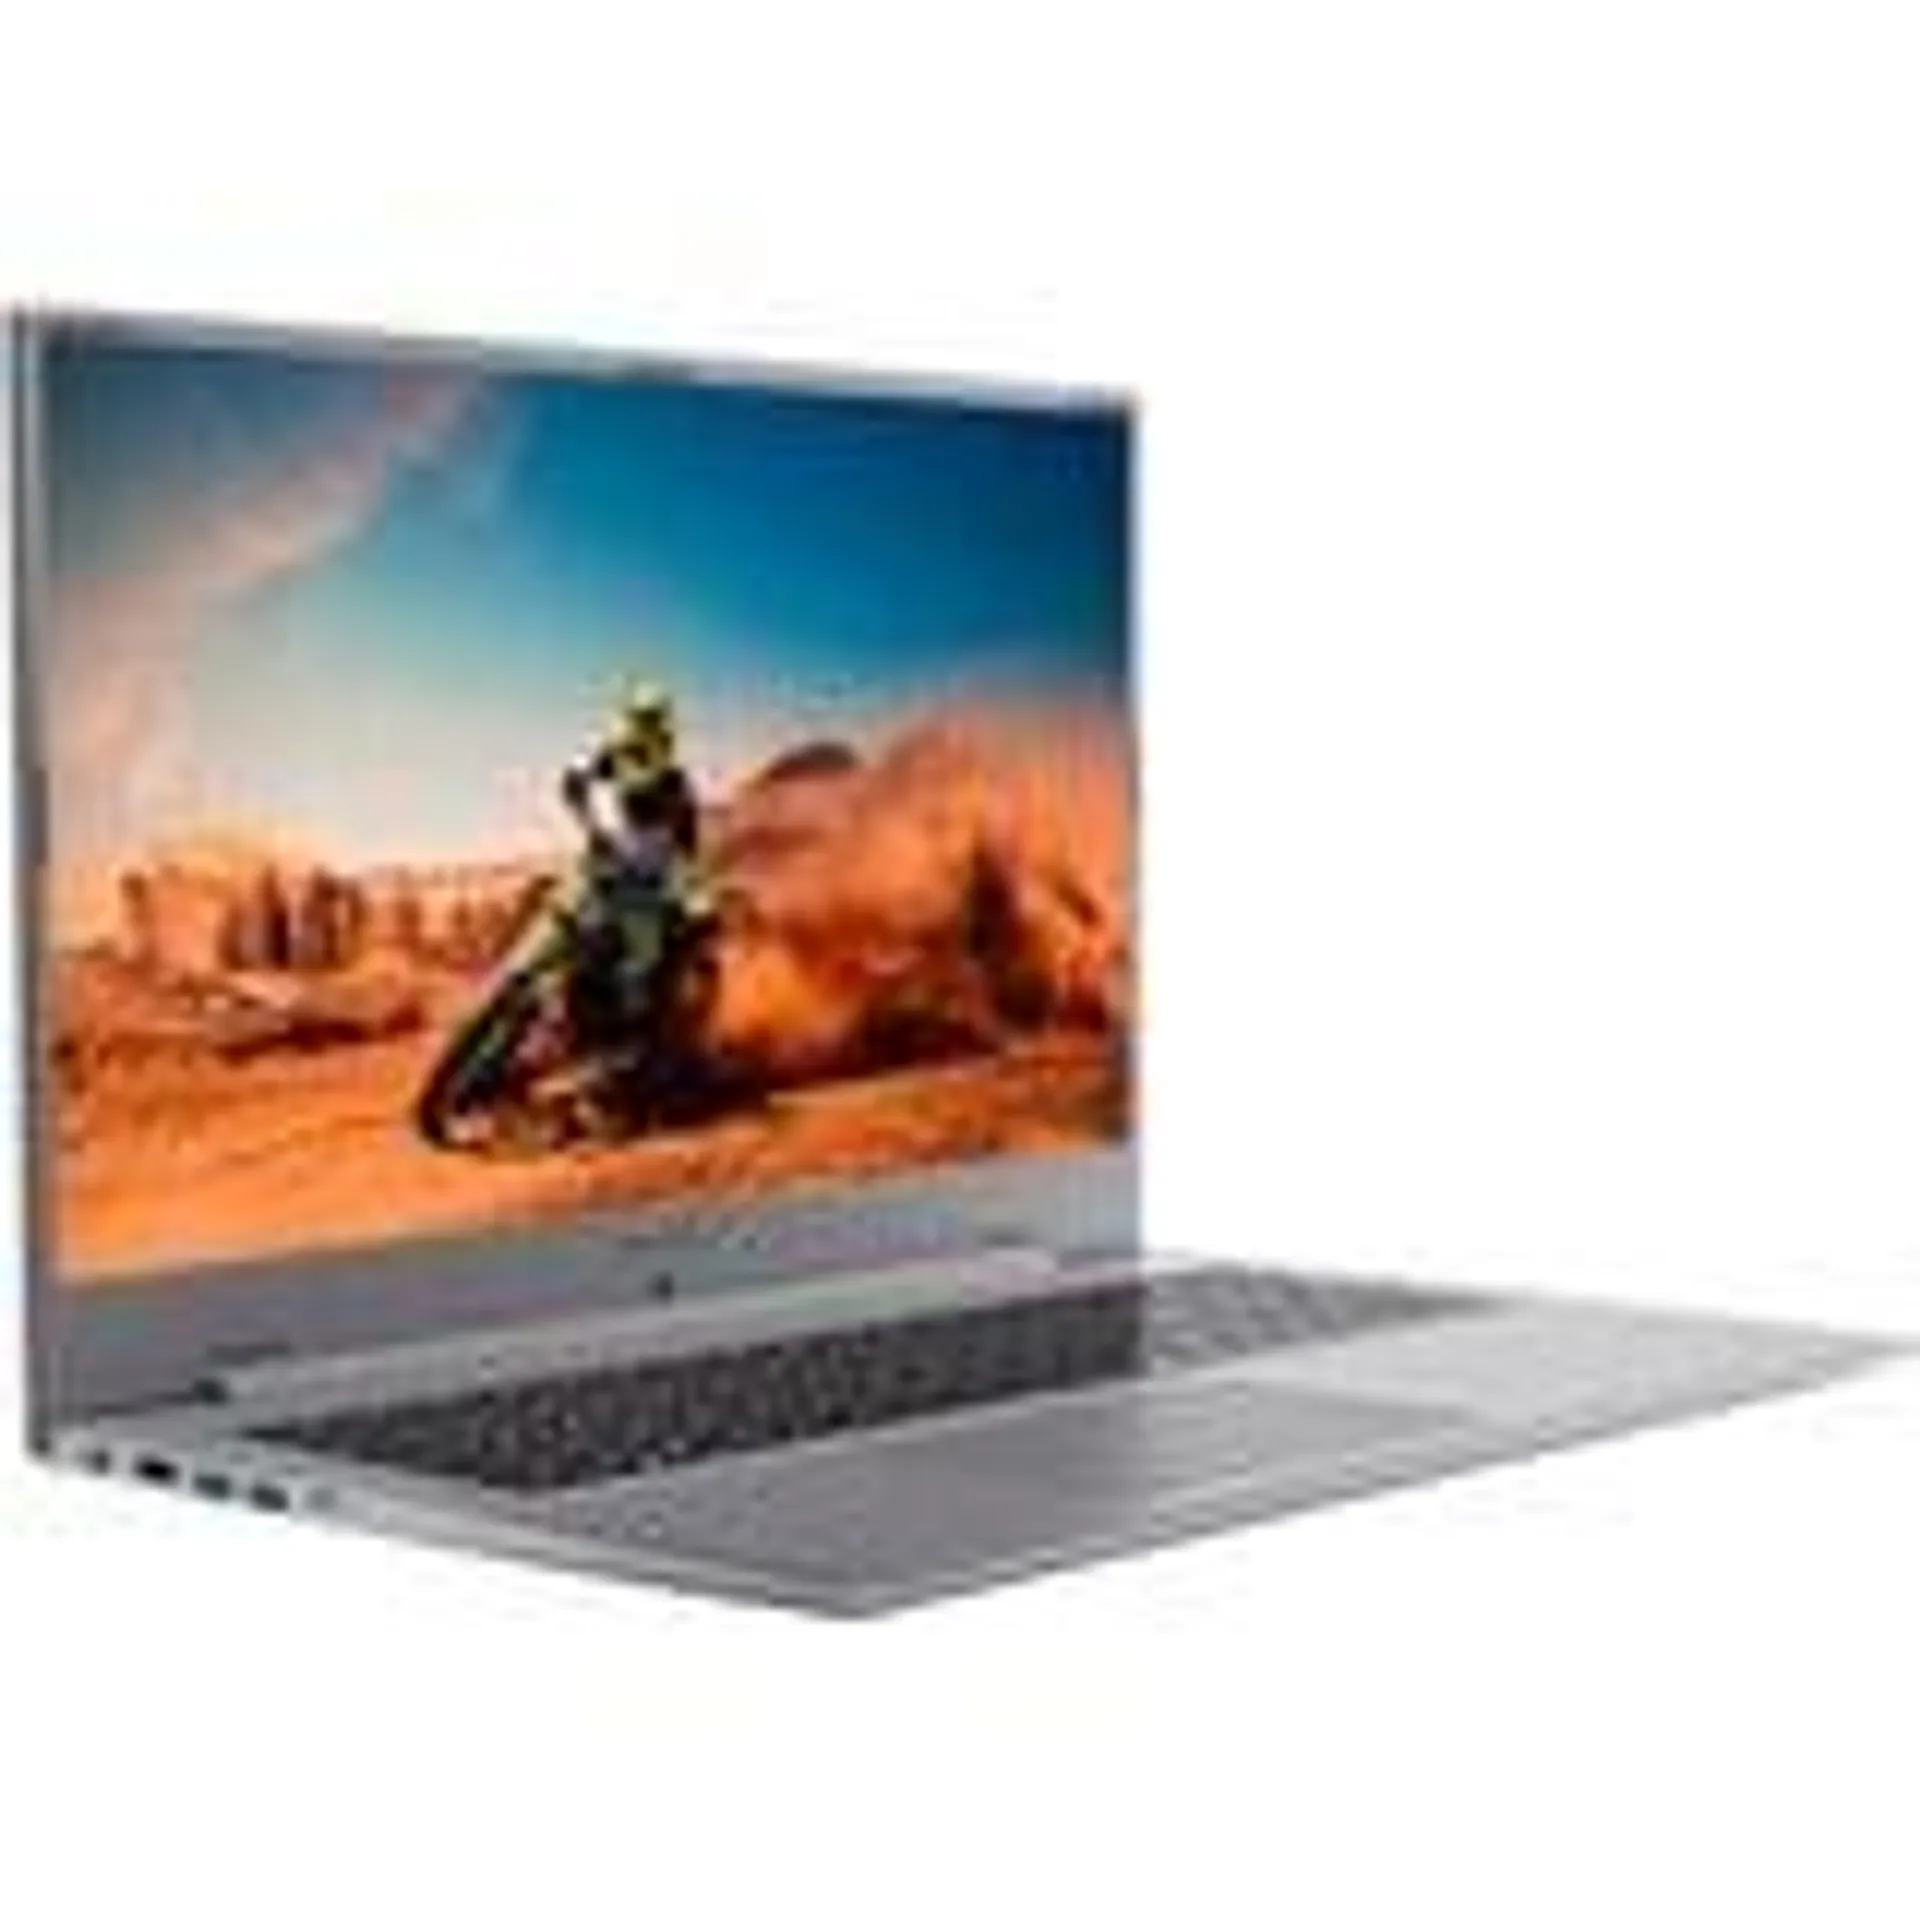 AKOYA S17403 (MD61709) 17.3" laptop